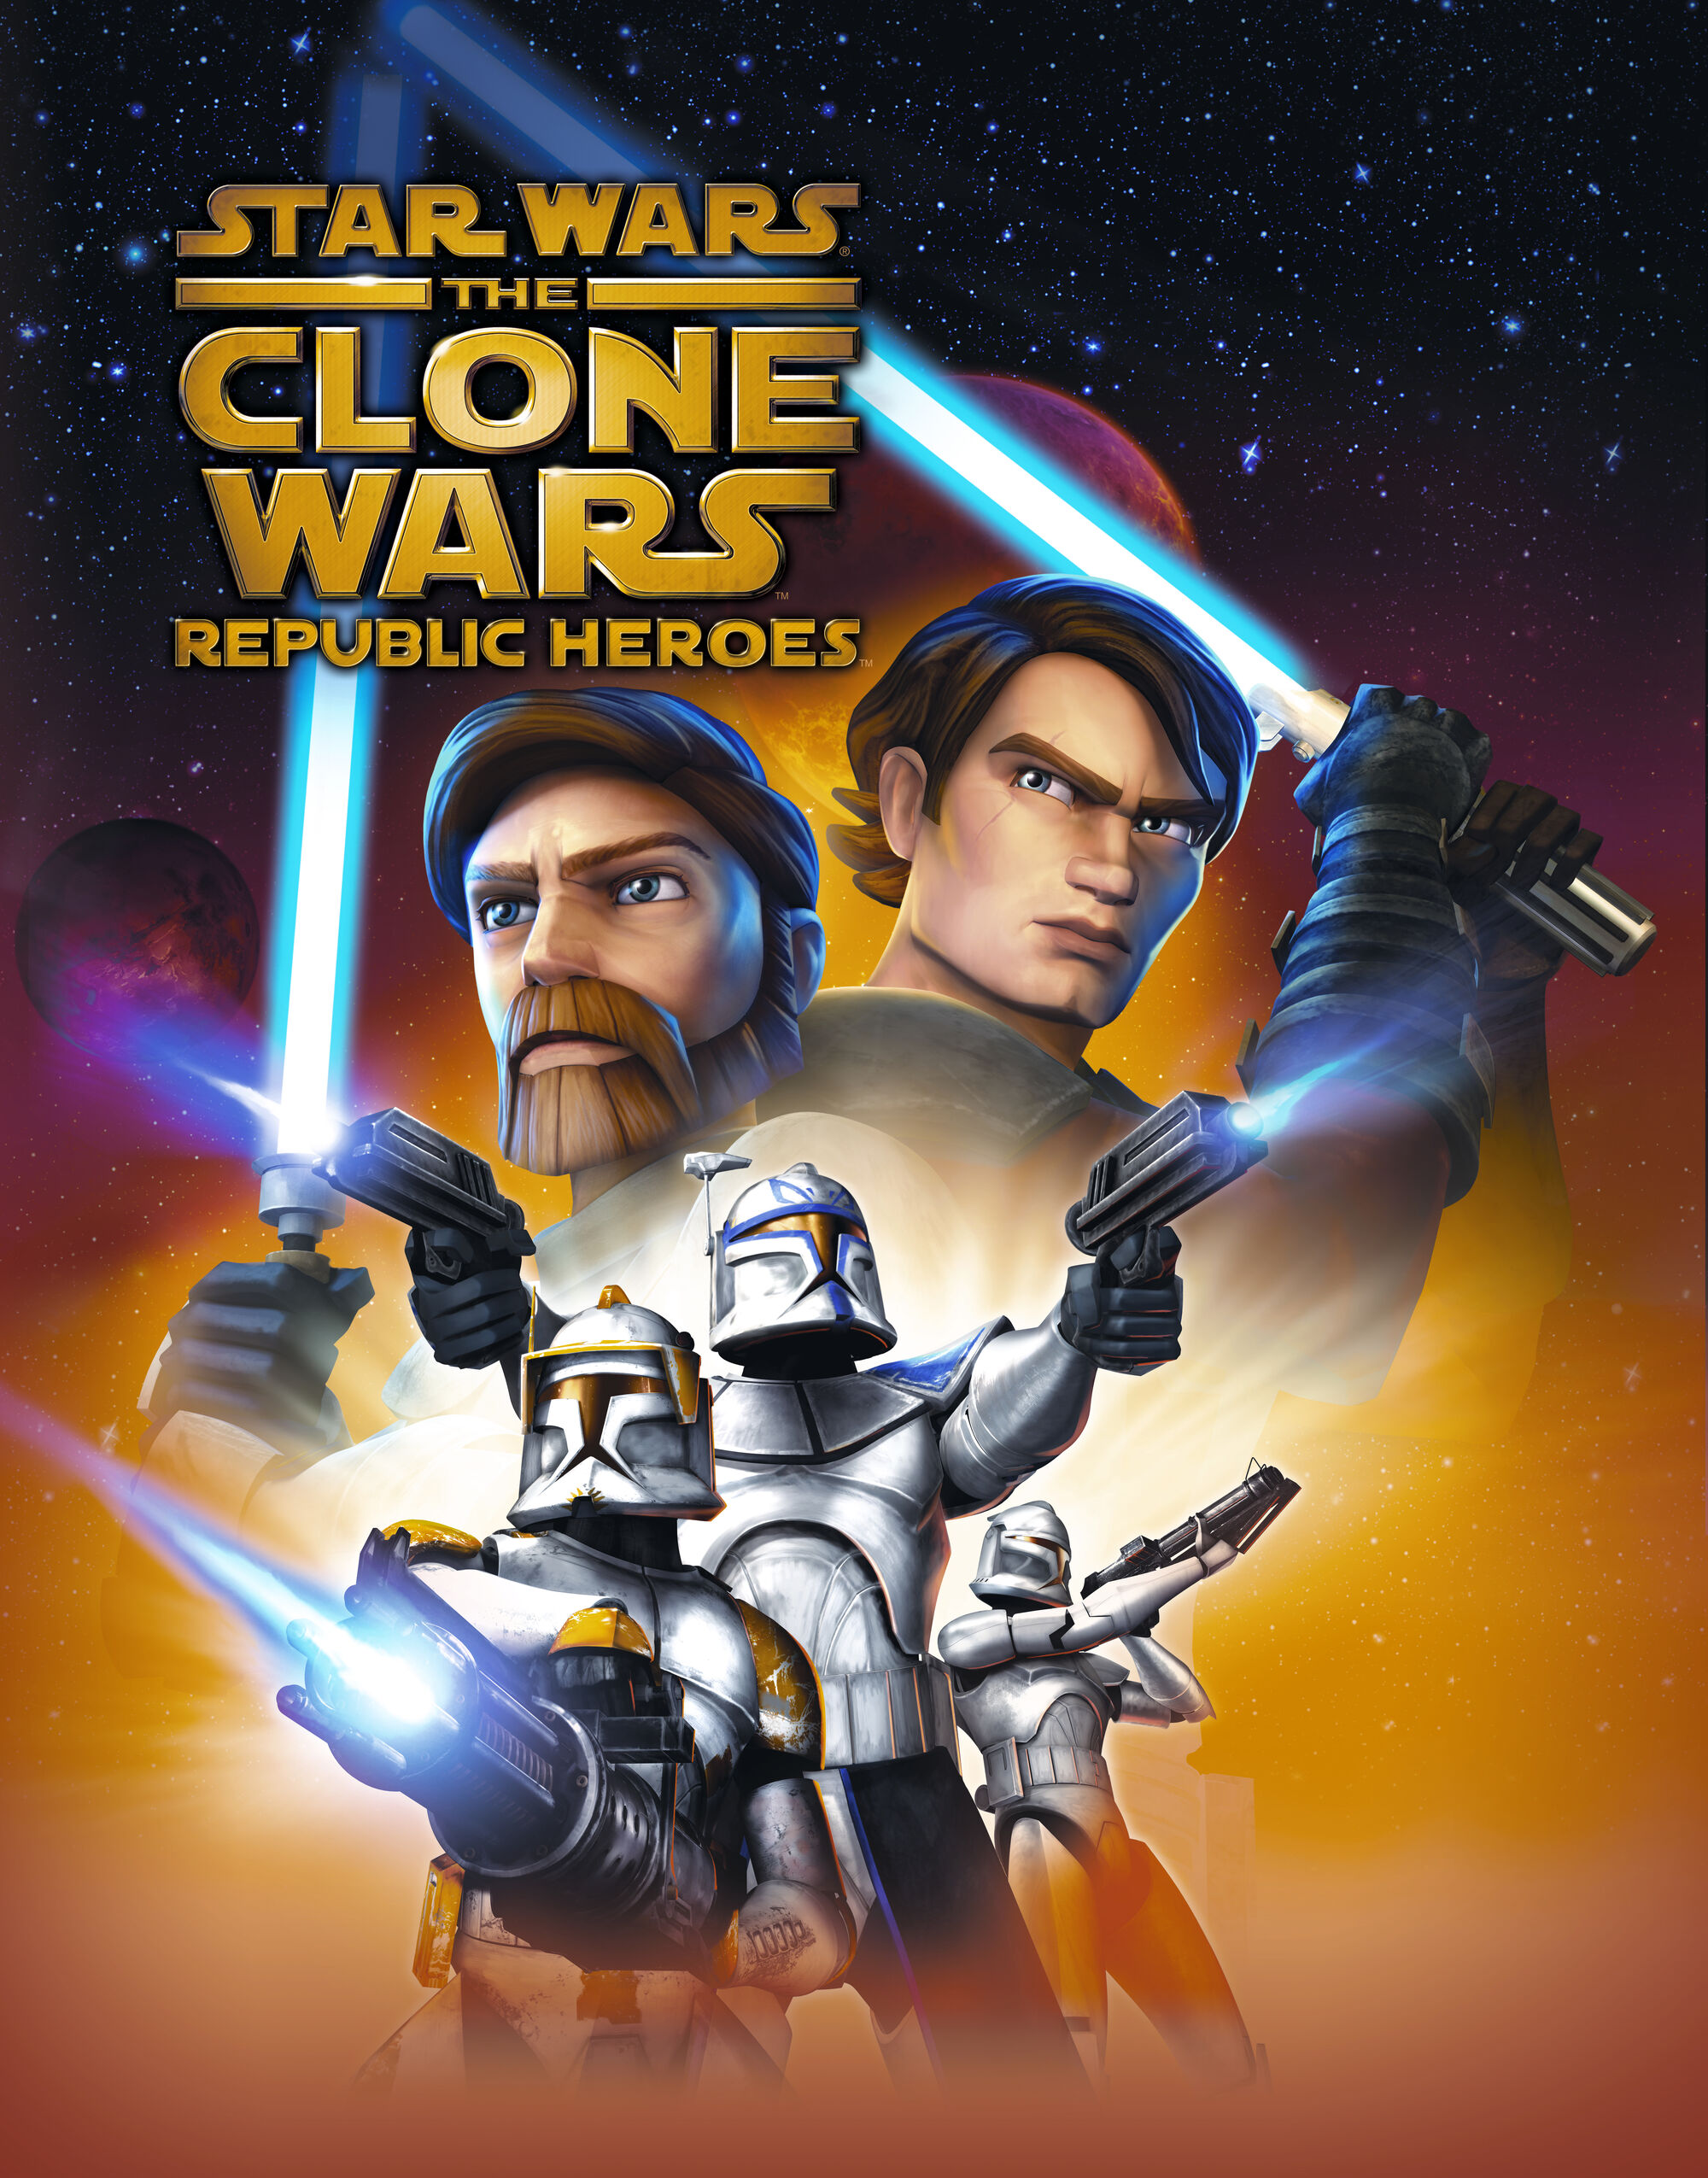 star-wars-the-clone-wars-republic-heroes-star-wars-wiki-fandom-powered-by-wikia